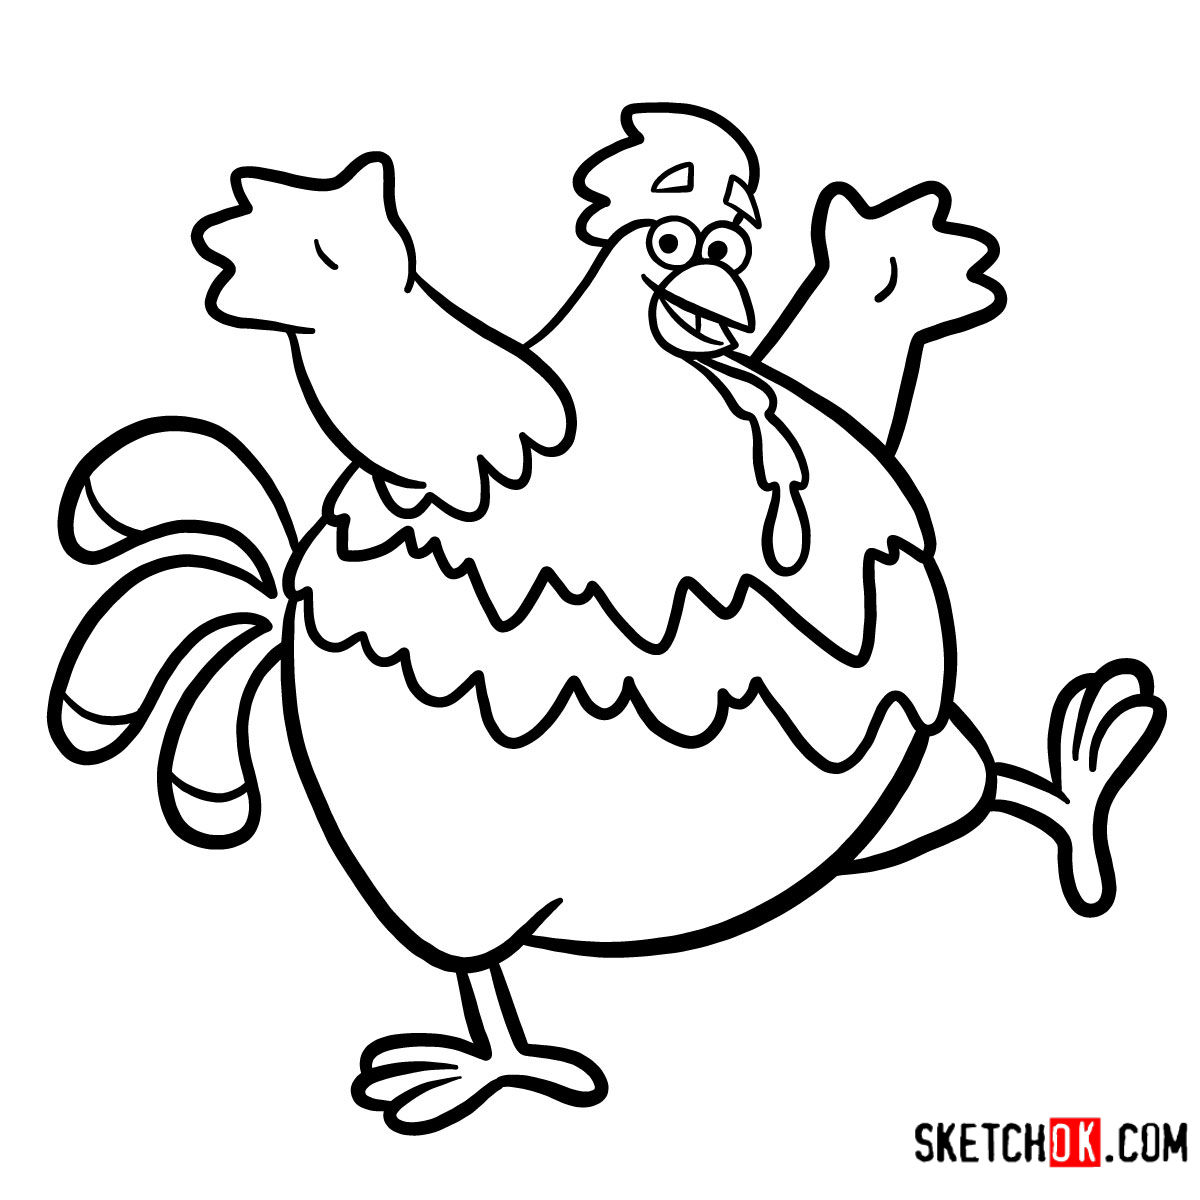 How to draw Big Red Chicken | Dora the Explorer